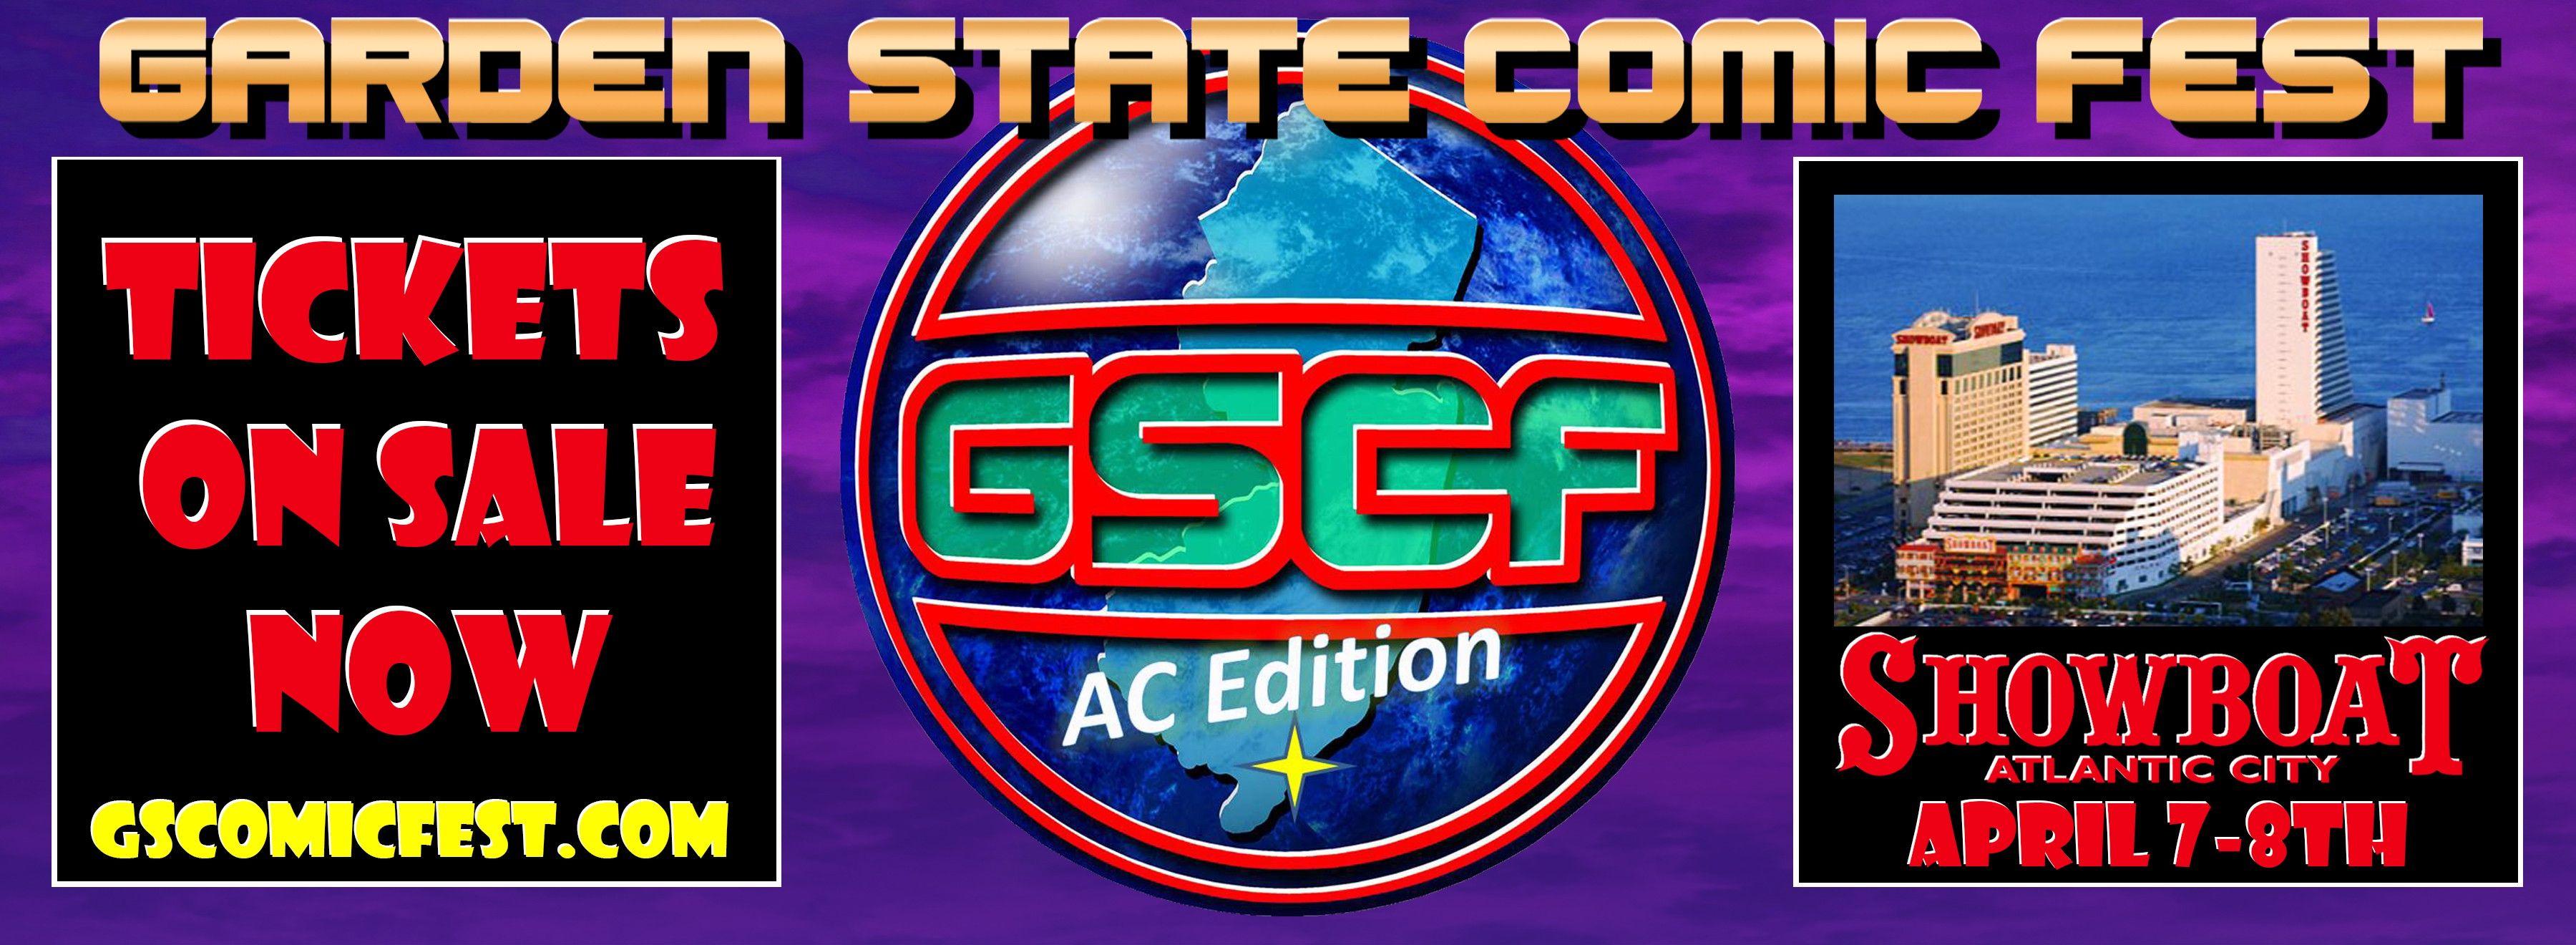 Gscf Logo - GSCF SB FB BANNER 2018 on sale now